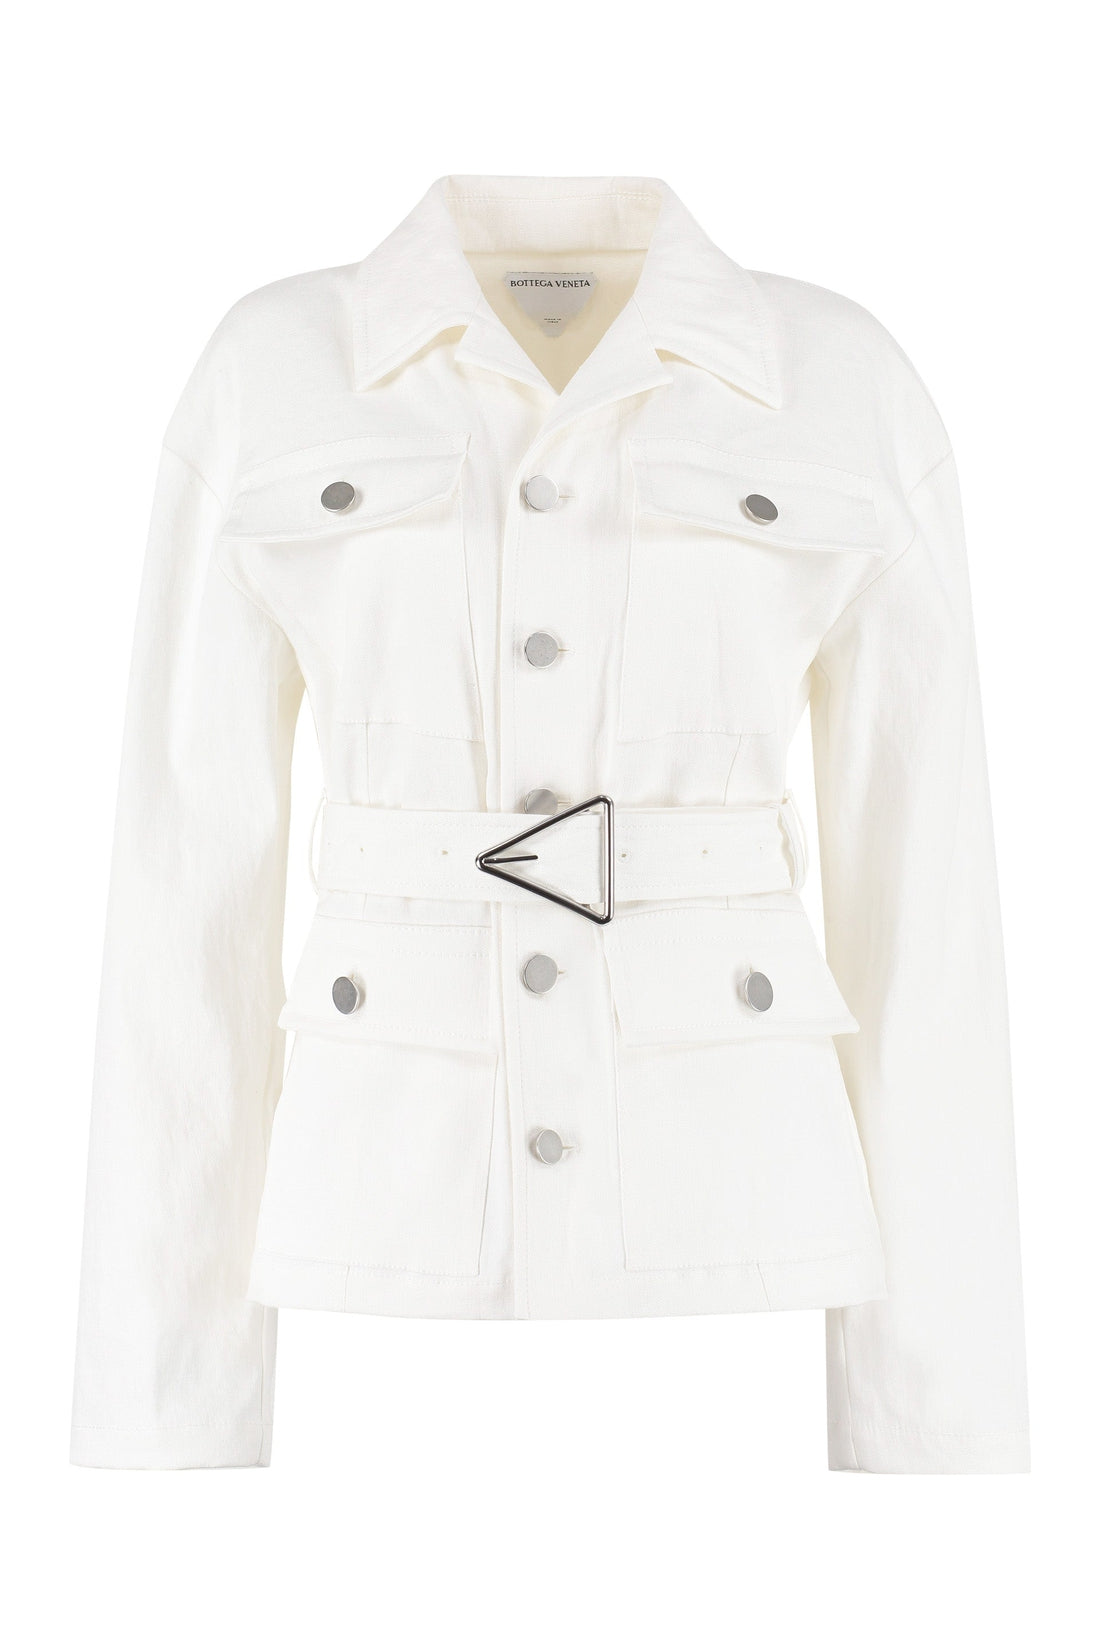 Bottega Veneta-OUTLET-SALE-Linen jacket-ARCHIVIST